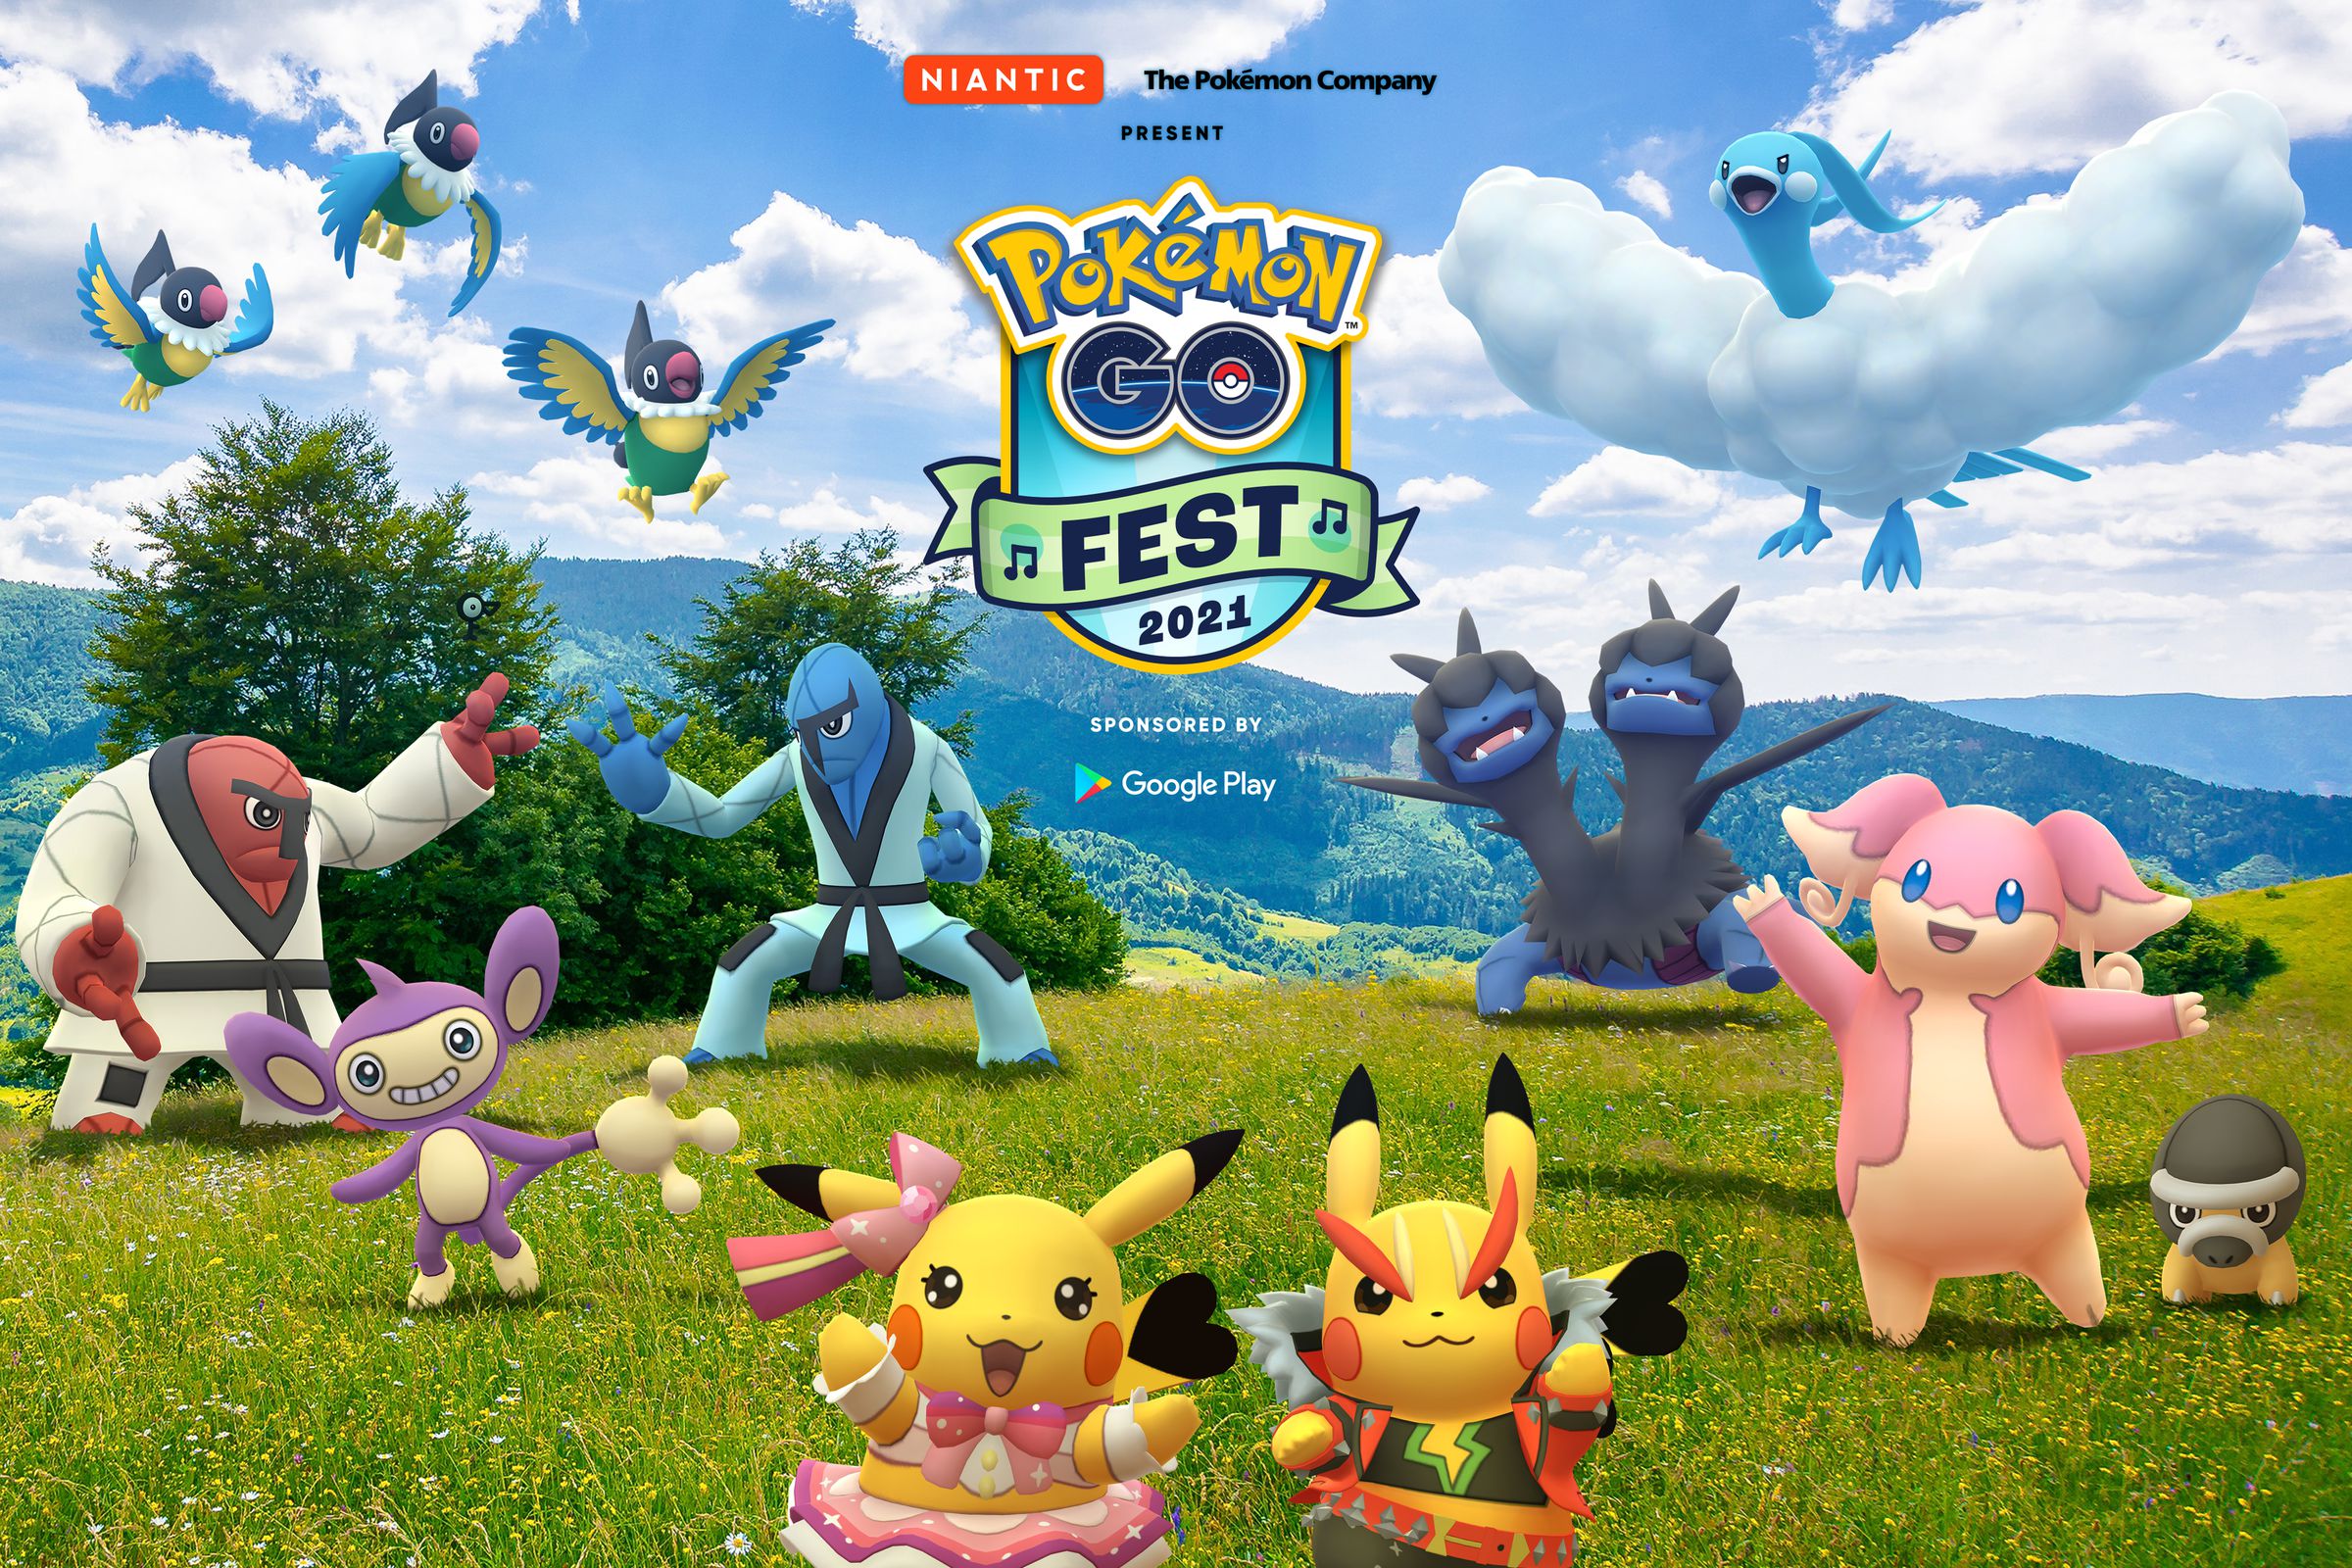 Art for the 2021 Pokémon Go Fest.